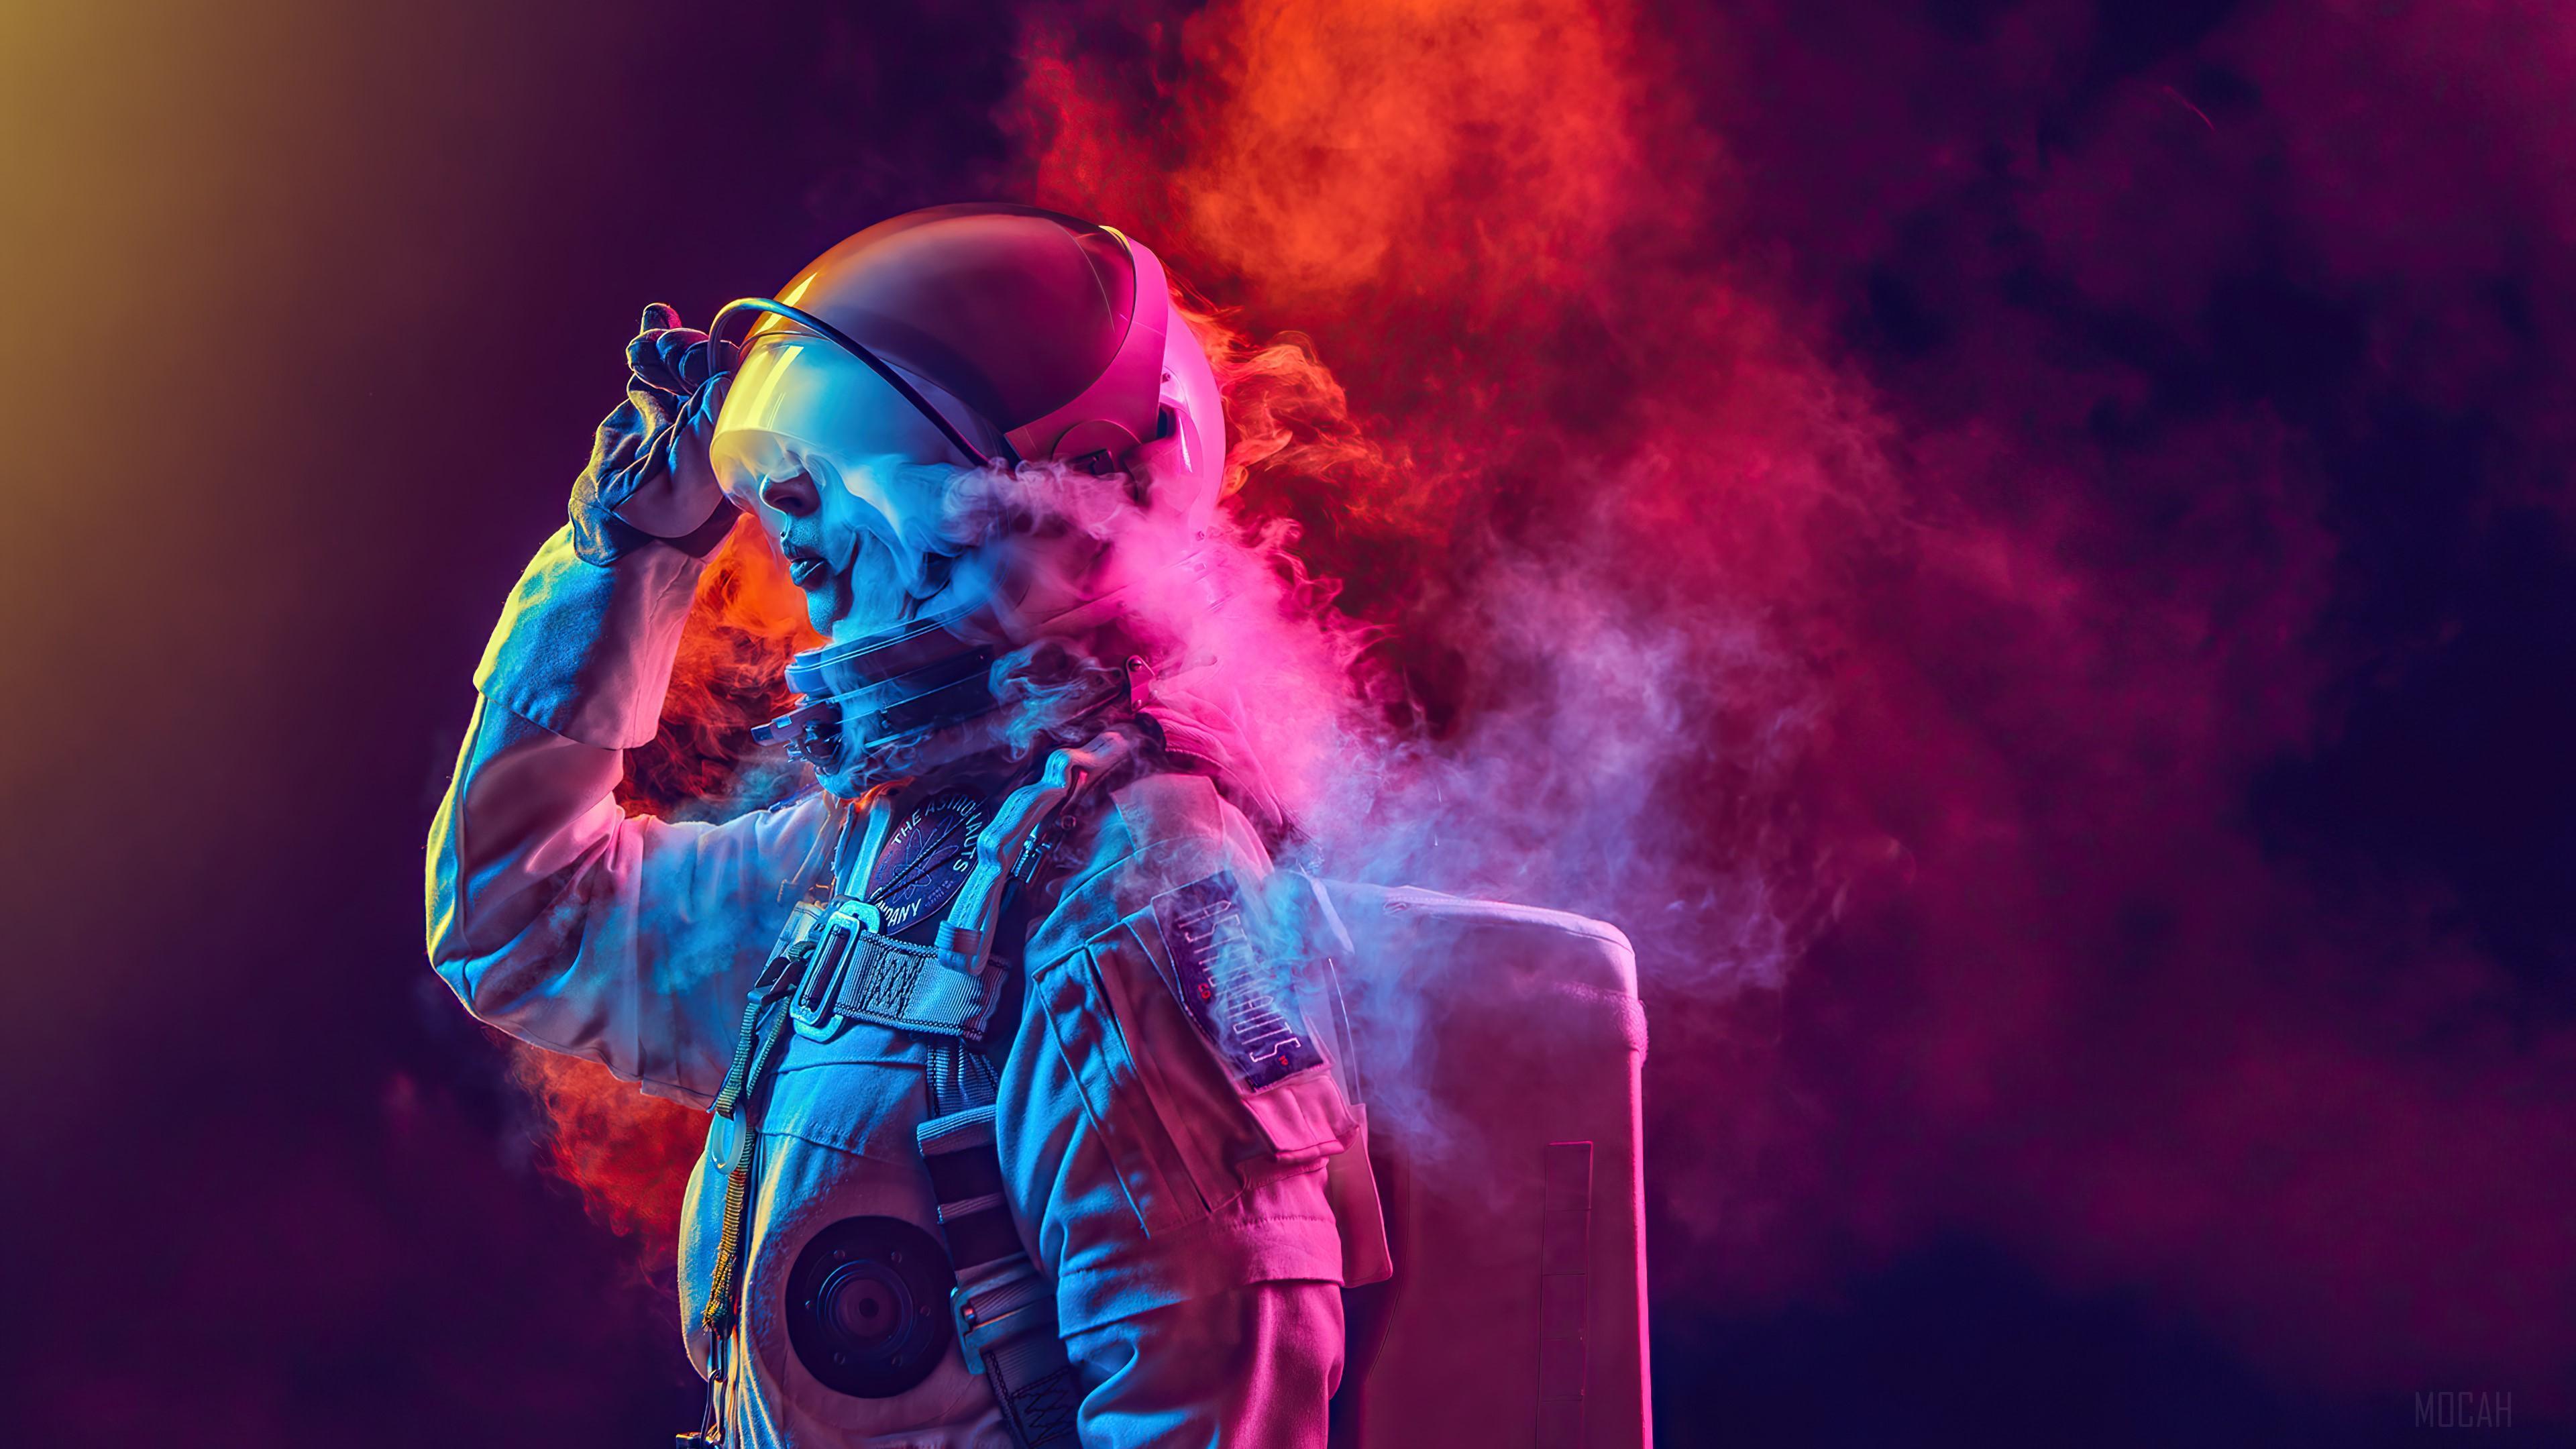 HD wallpaper, Astronaut, Smoke, Digital Art 4K